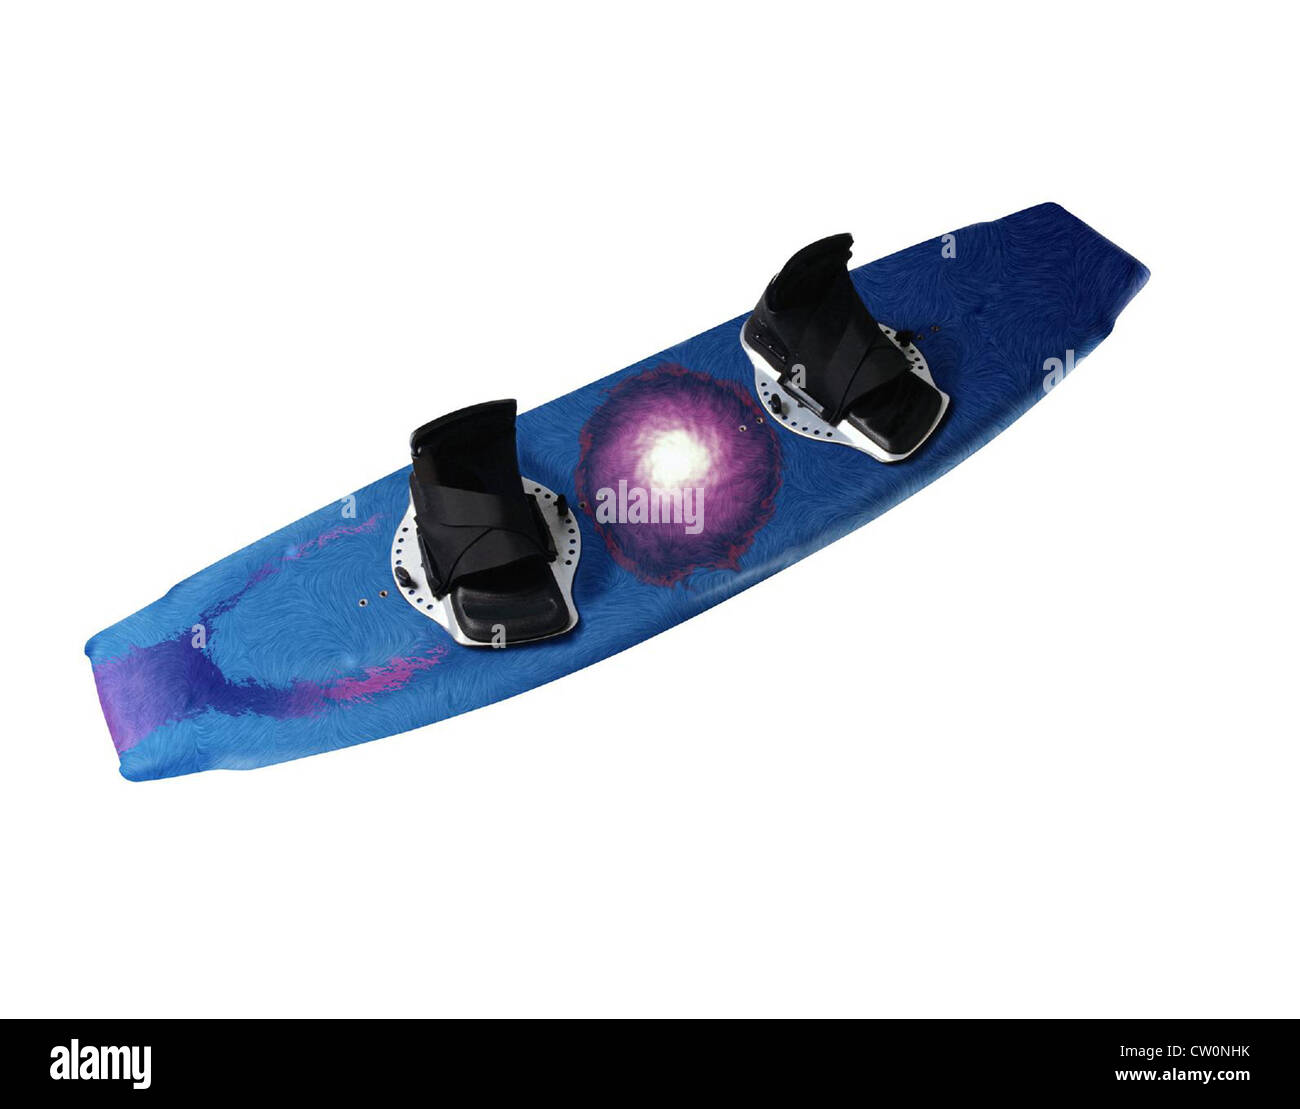 Snowboard Stock Photo